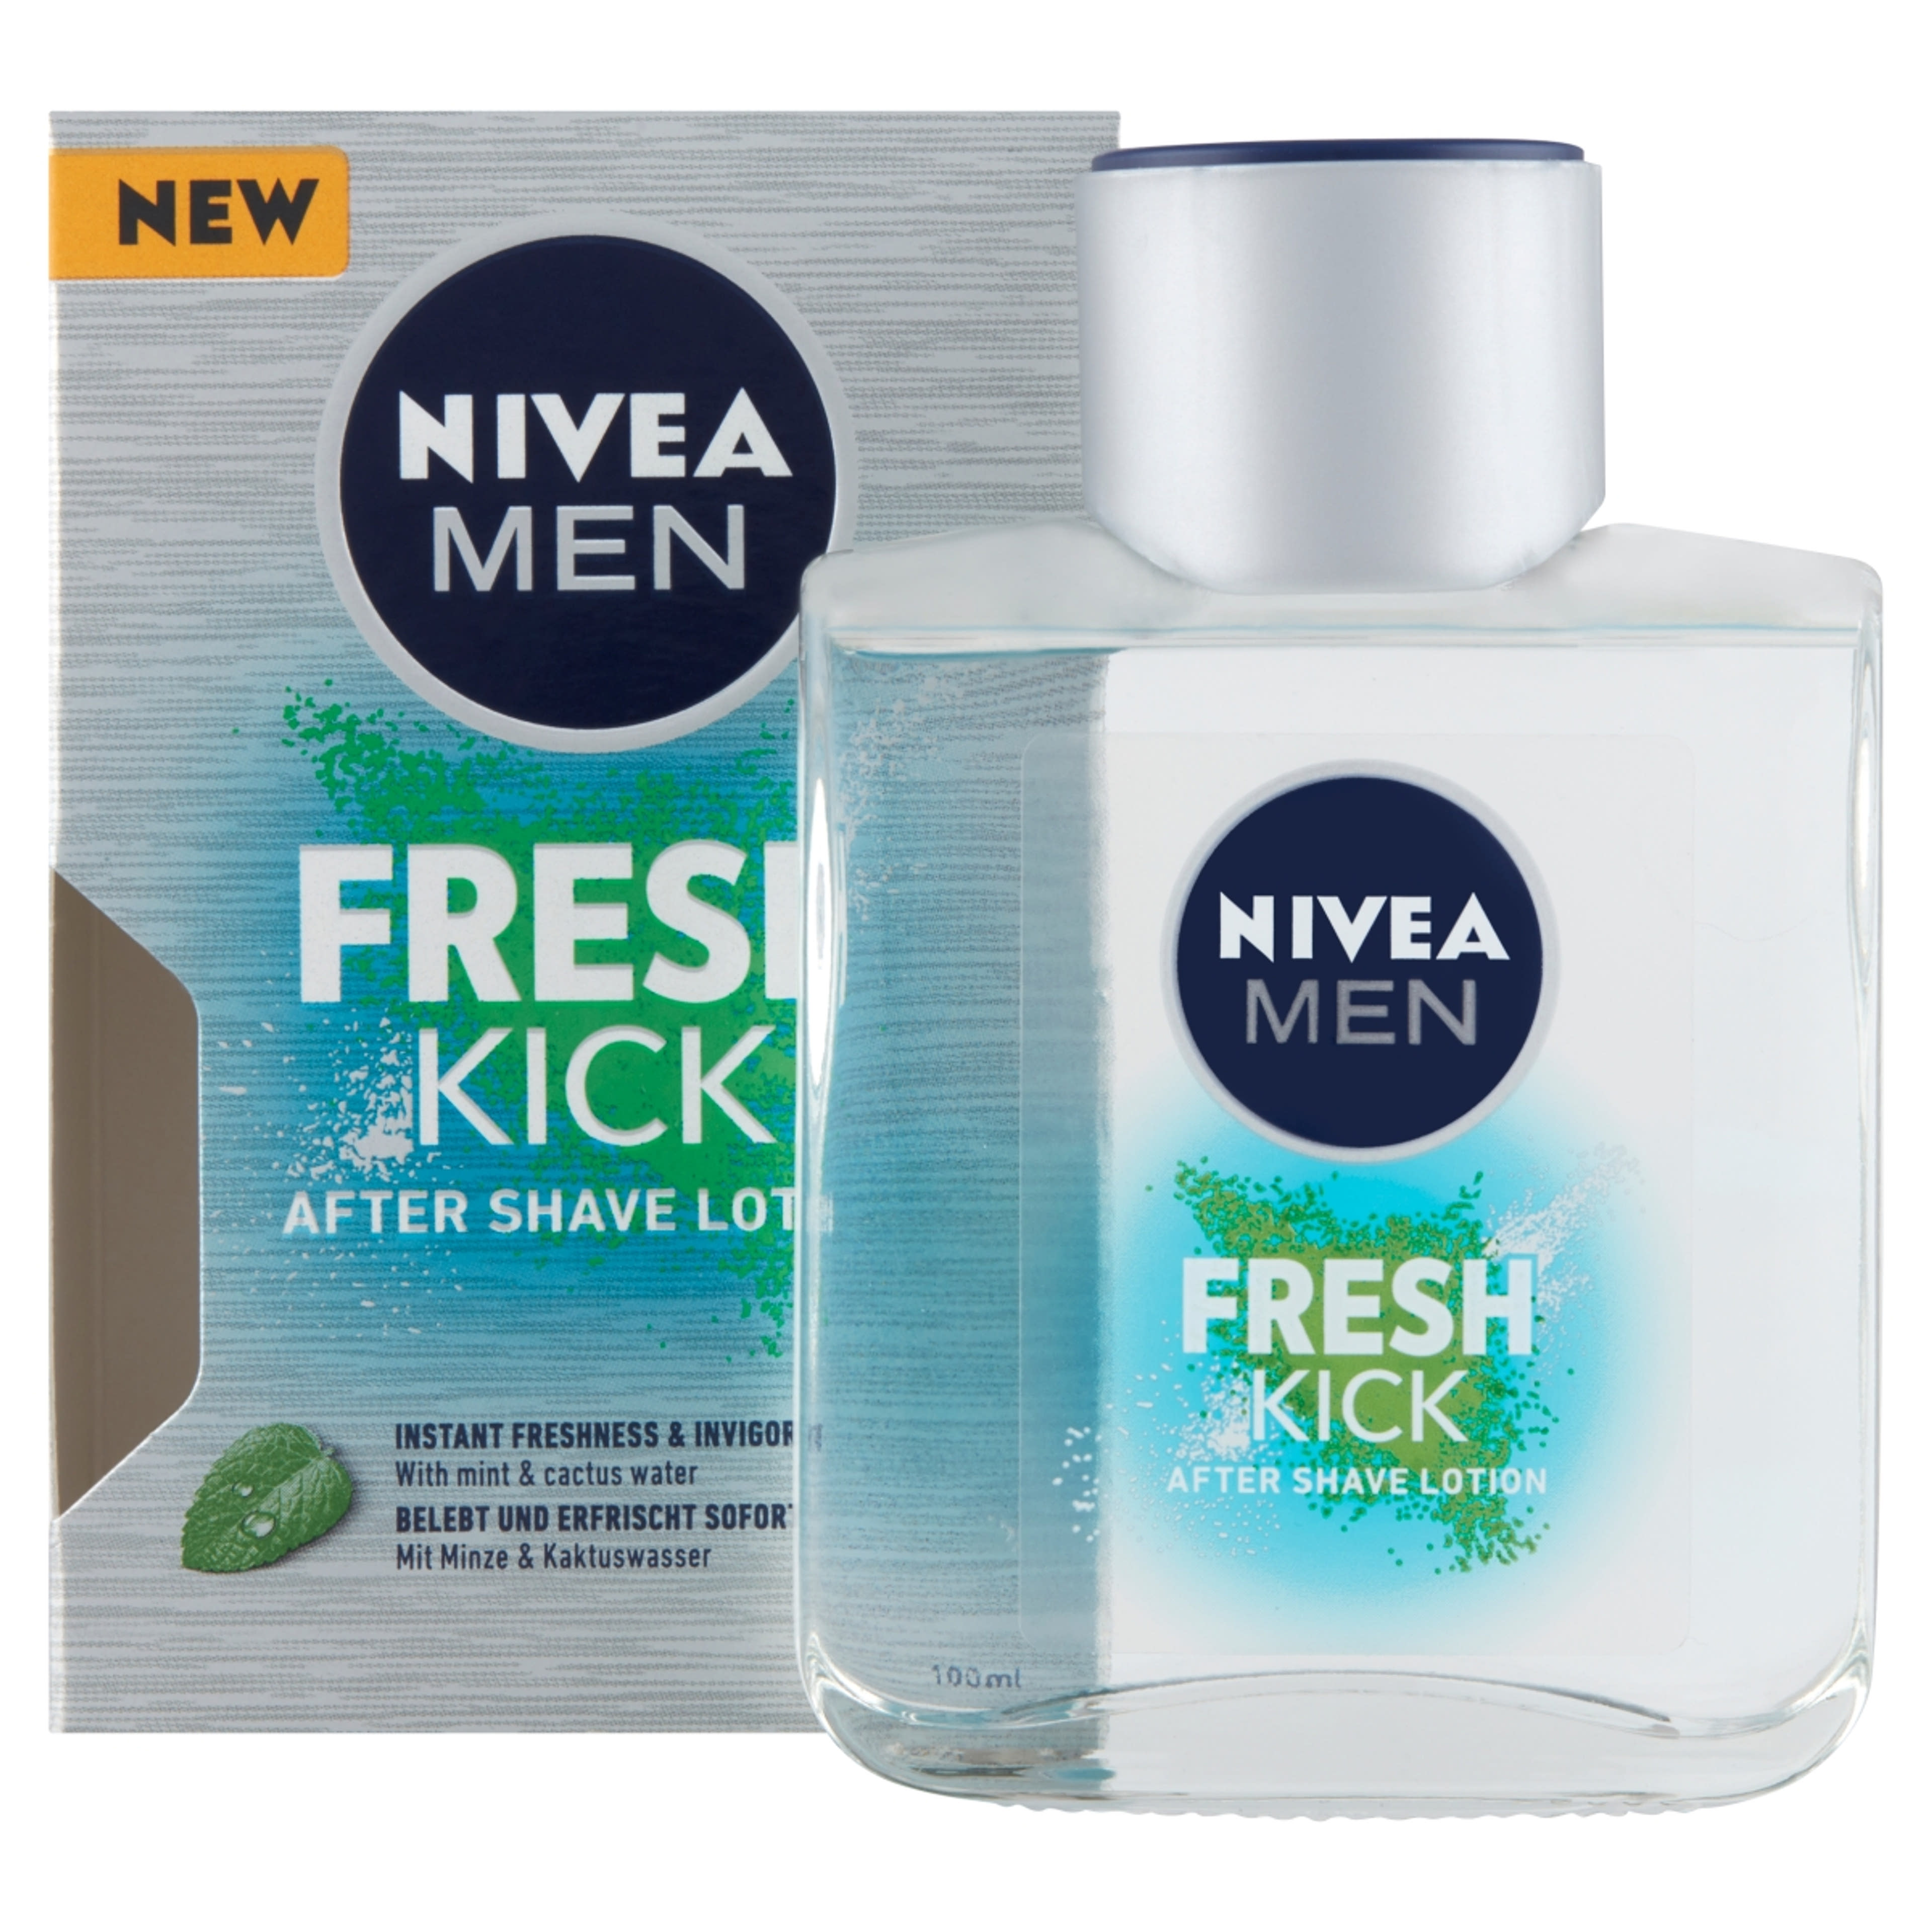 NIVEA MEN after shave fresh kick - 100 ml-2